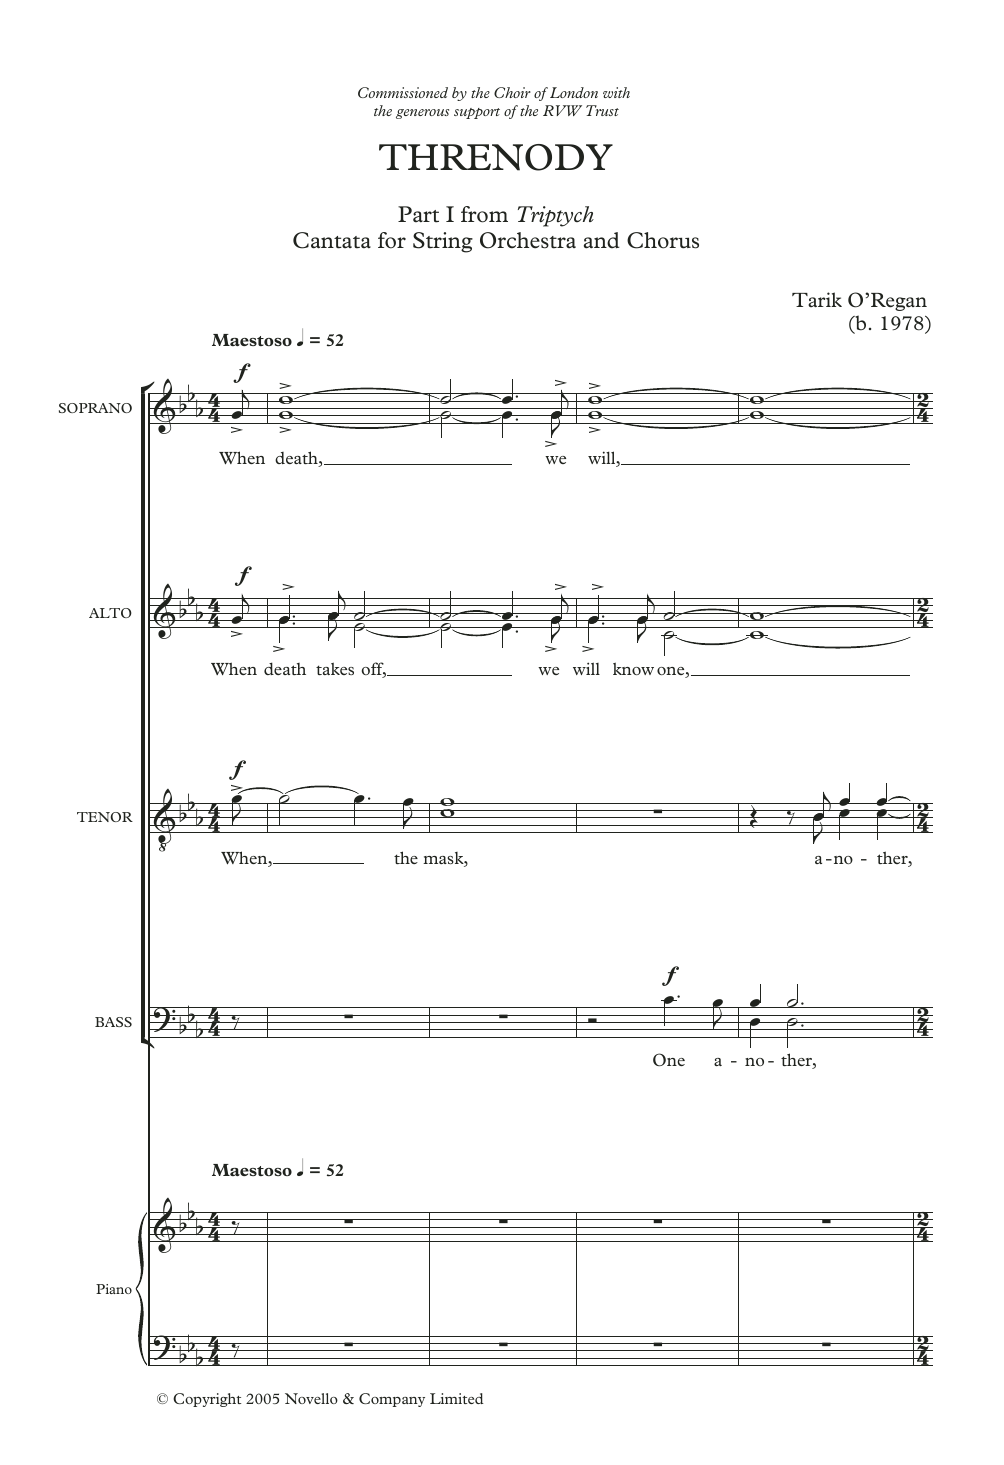 Tarik O'Regan Threnody Sheet Music Notes & Chords for SATB Choir - Download or Print PDF